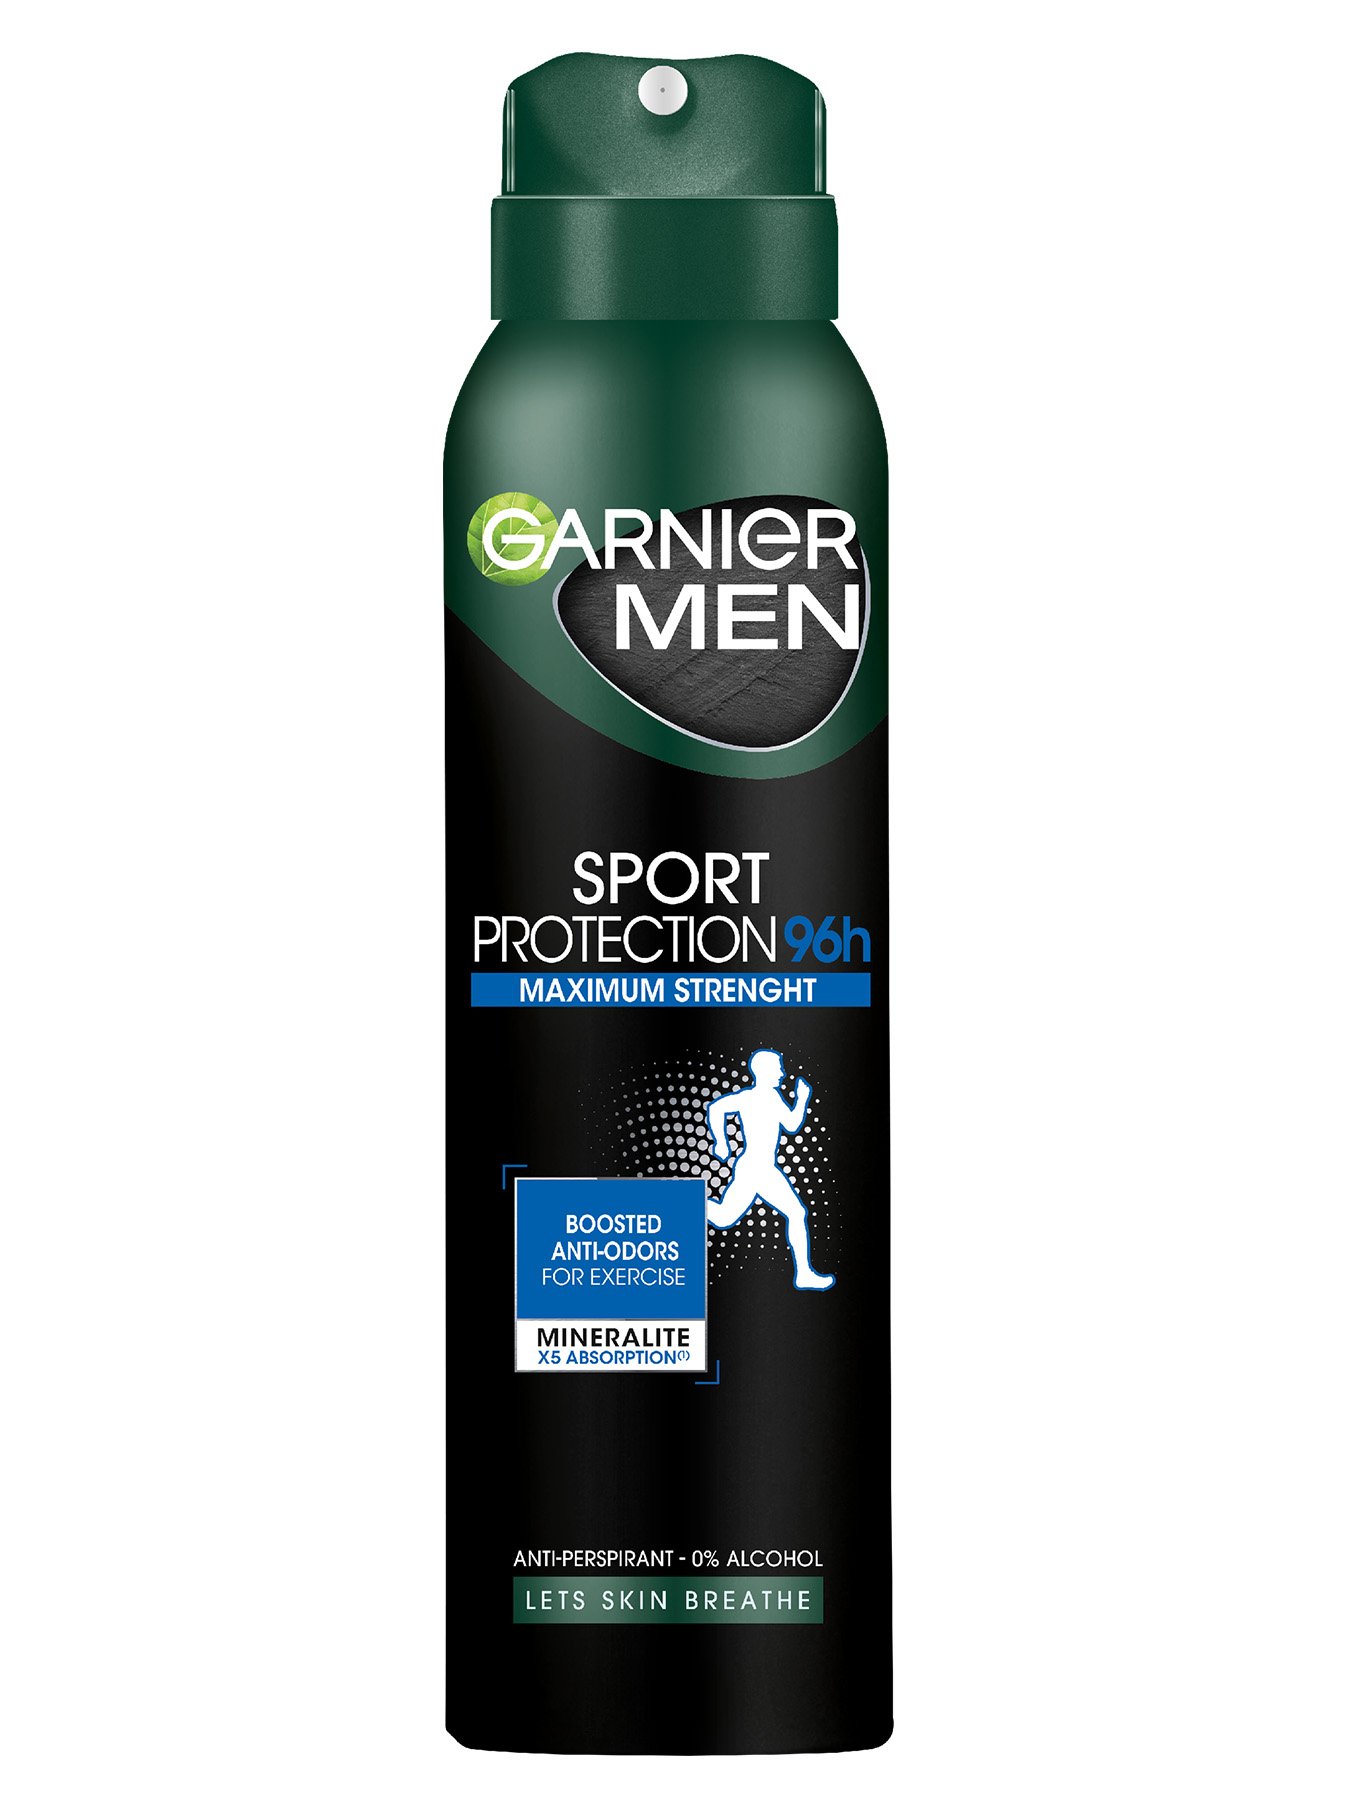 Garnier Mineral Deo Men Sport 96h antiperspirant Sprej